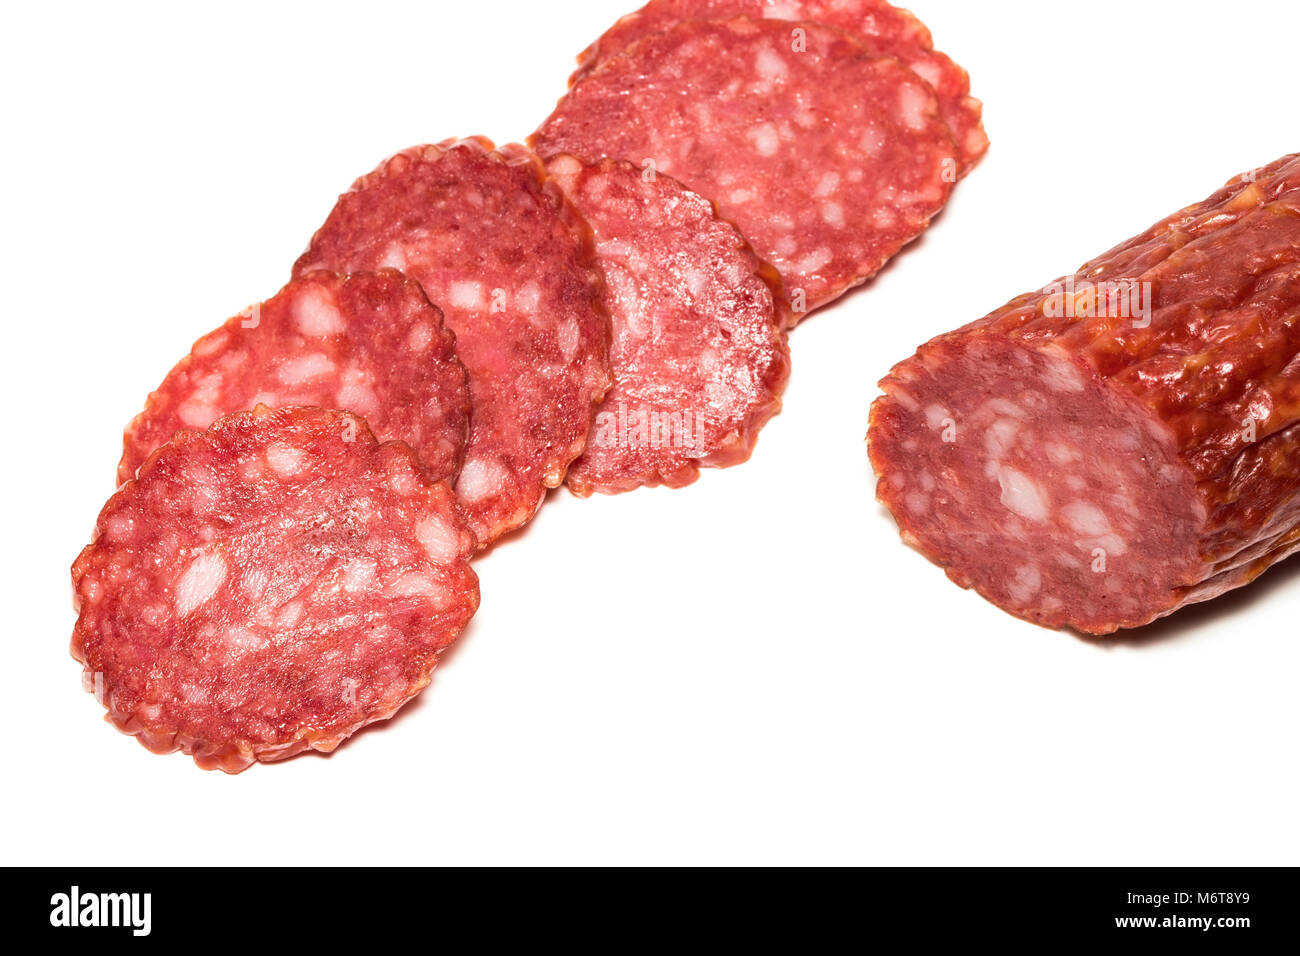 Salami smoked sausage isolated on white background cutout. Stock Photo